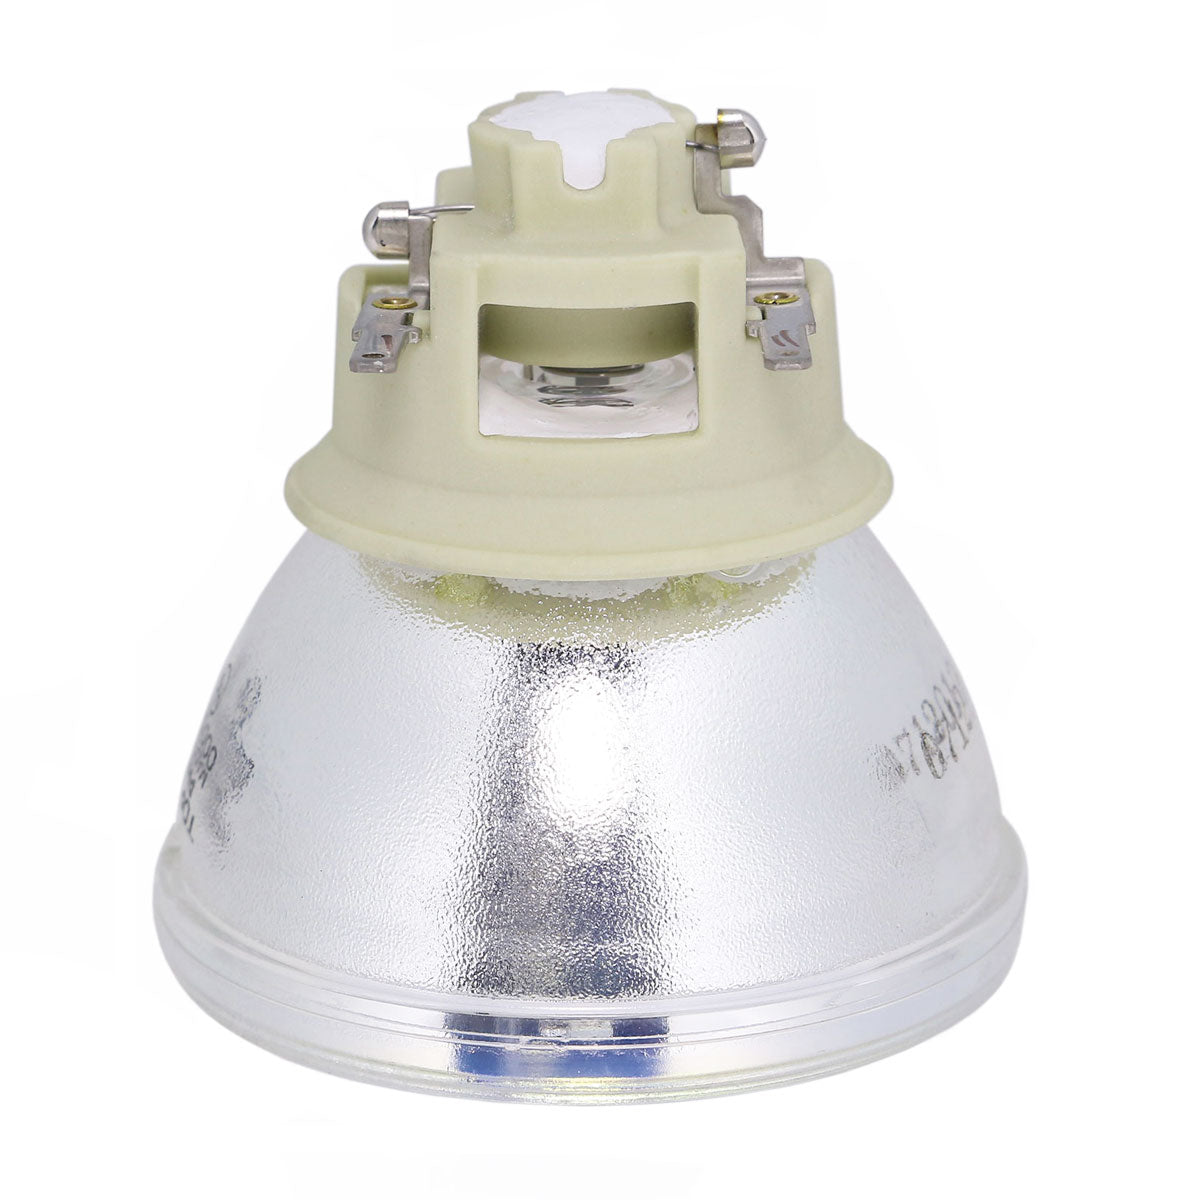 Viewsonic RLC-104 Philips Projector Bare Lamp